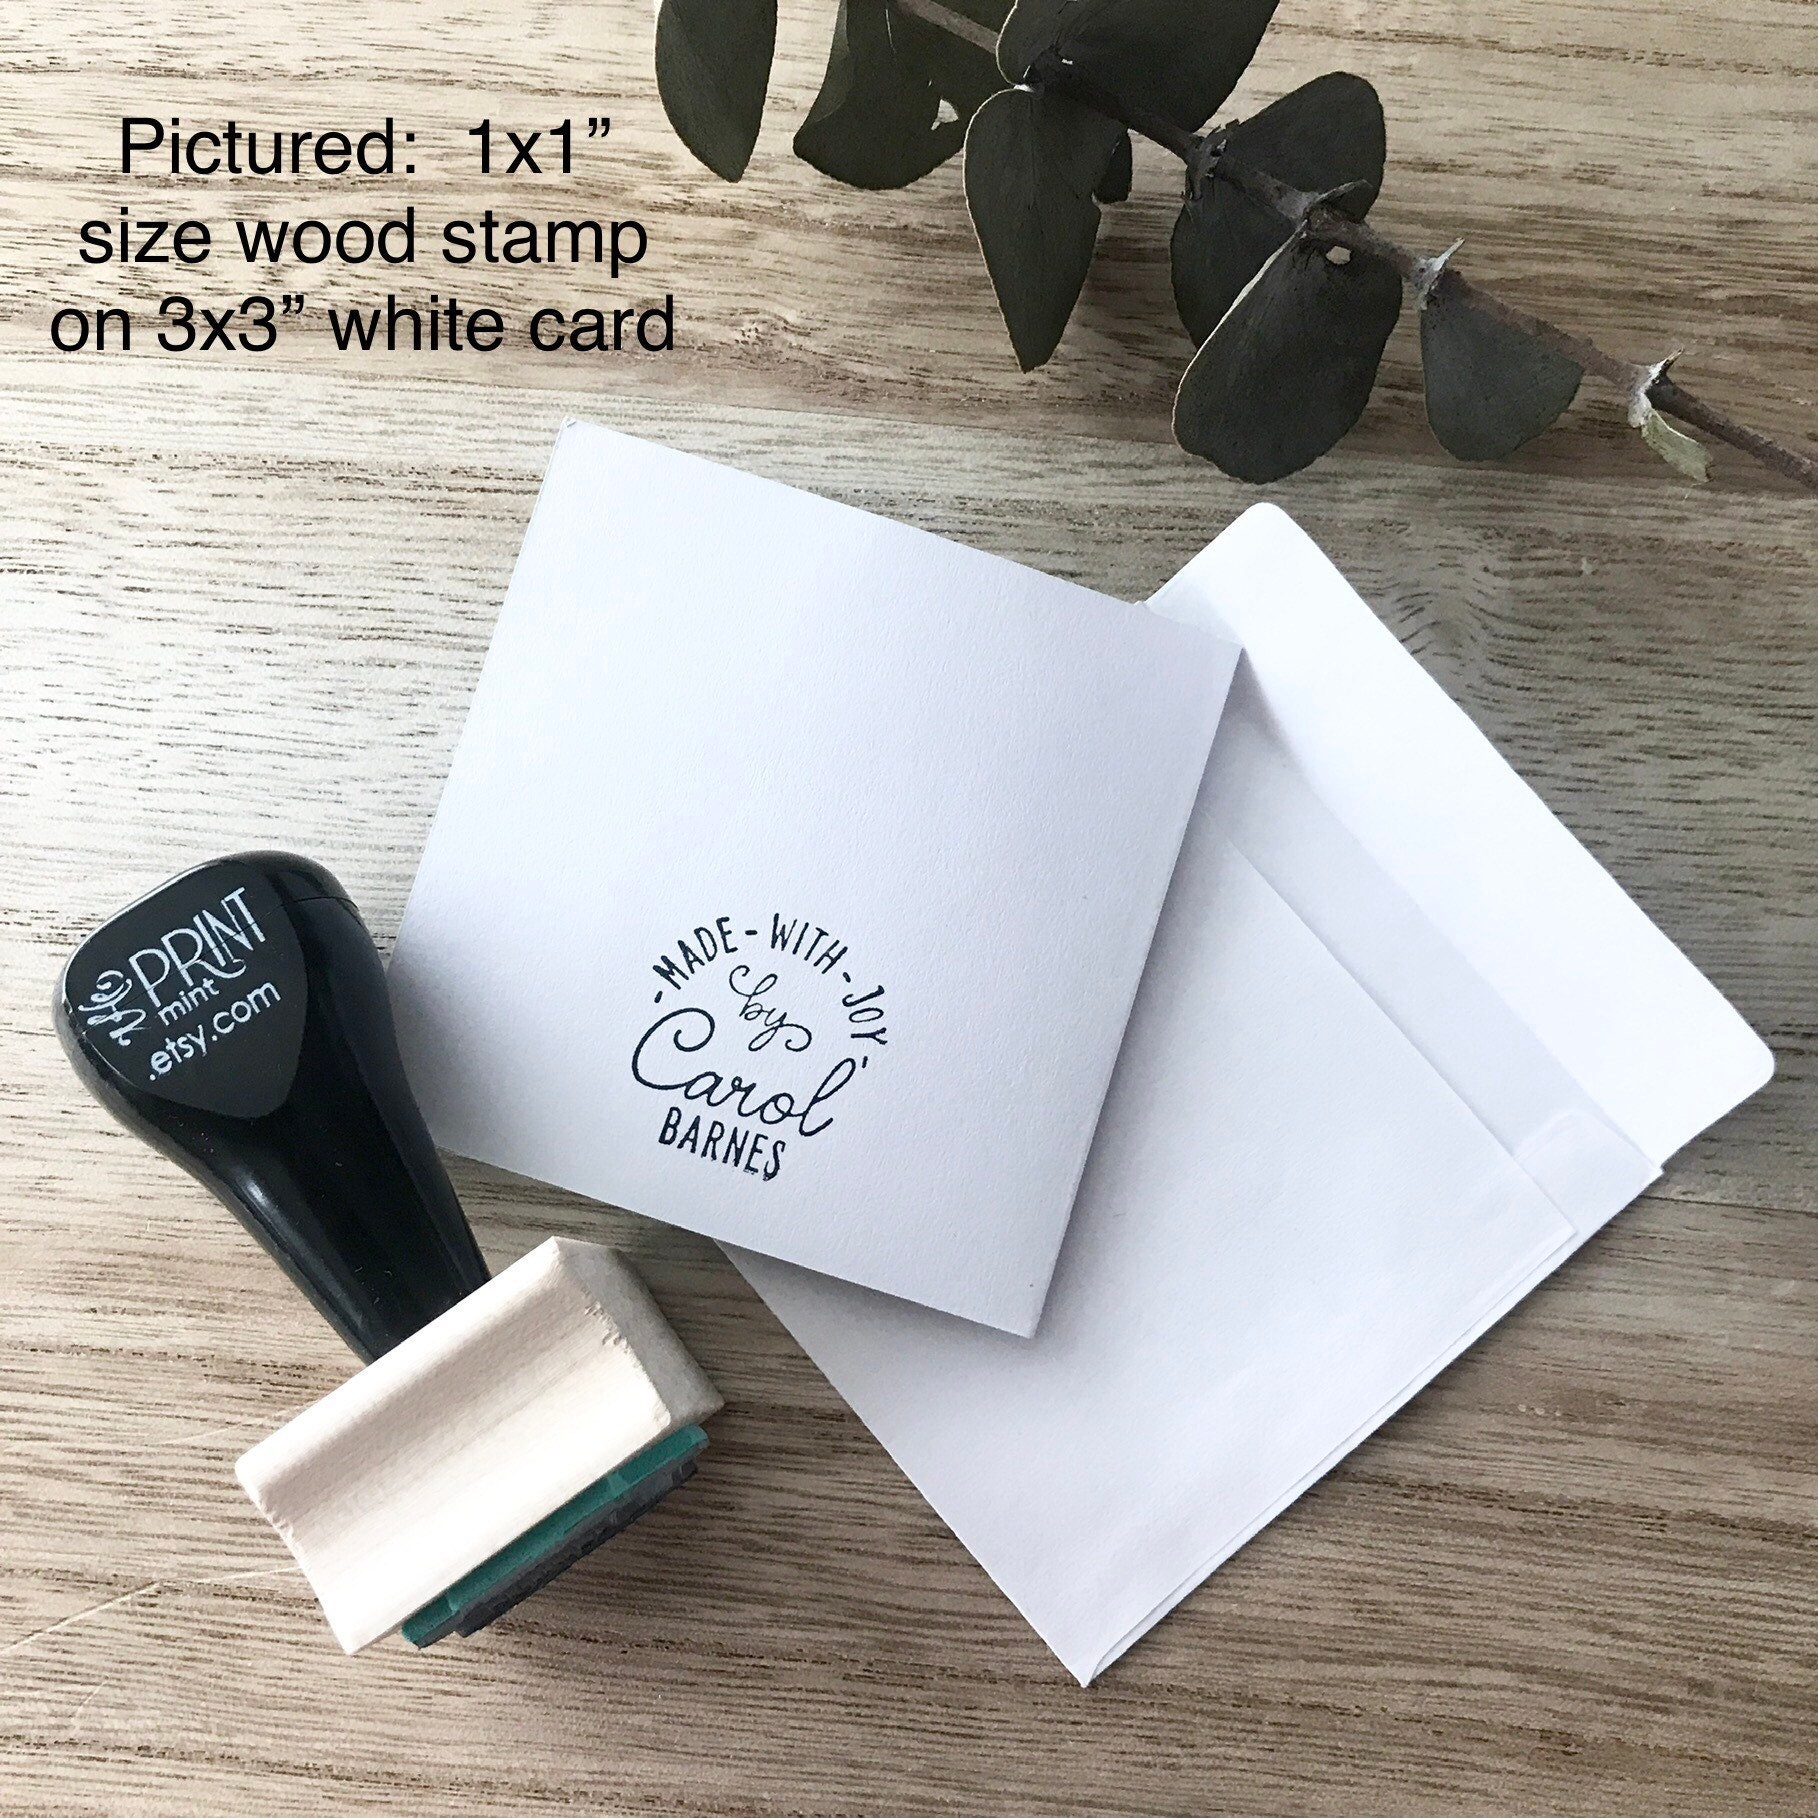 Personalized Stamp Pop-Up Shop & Sending Joy!